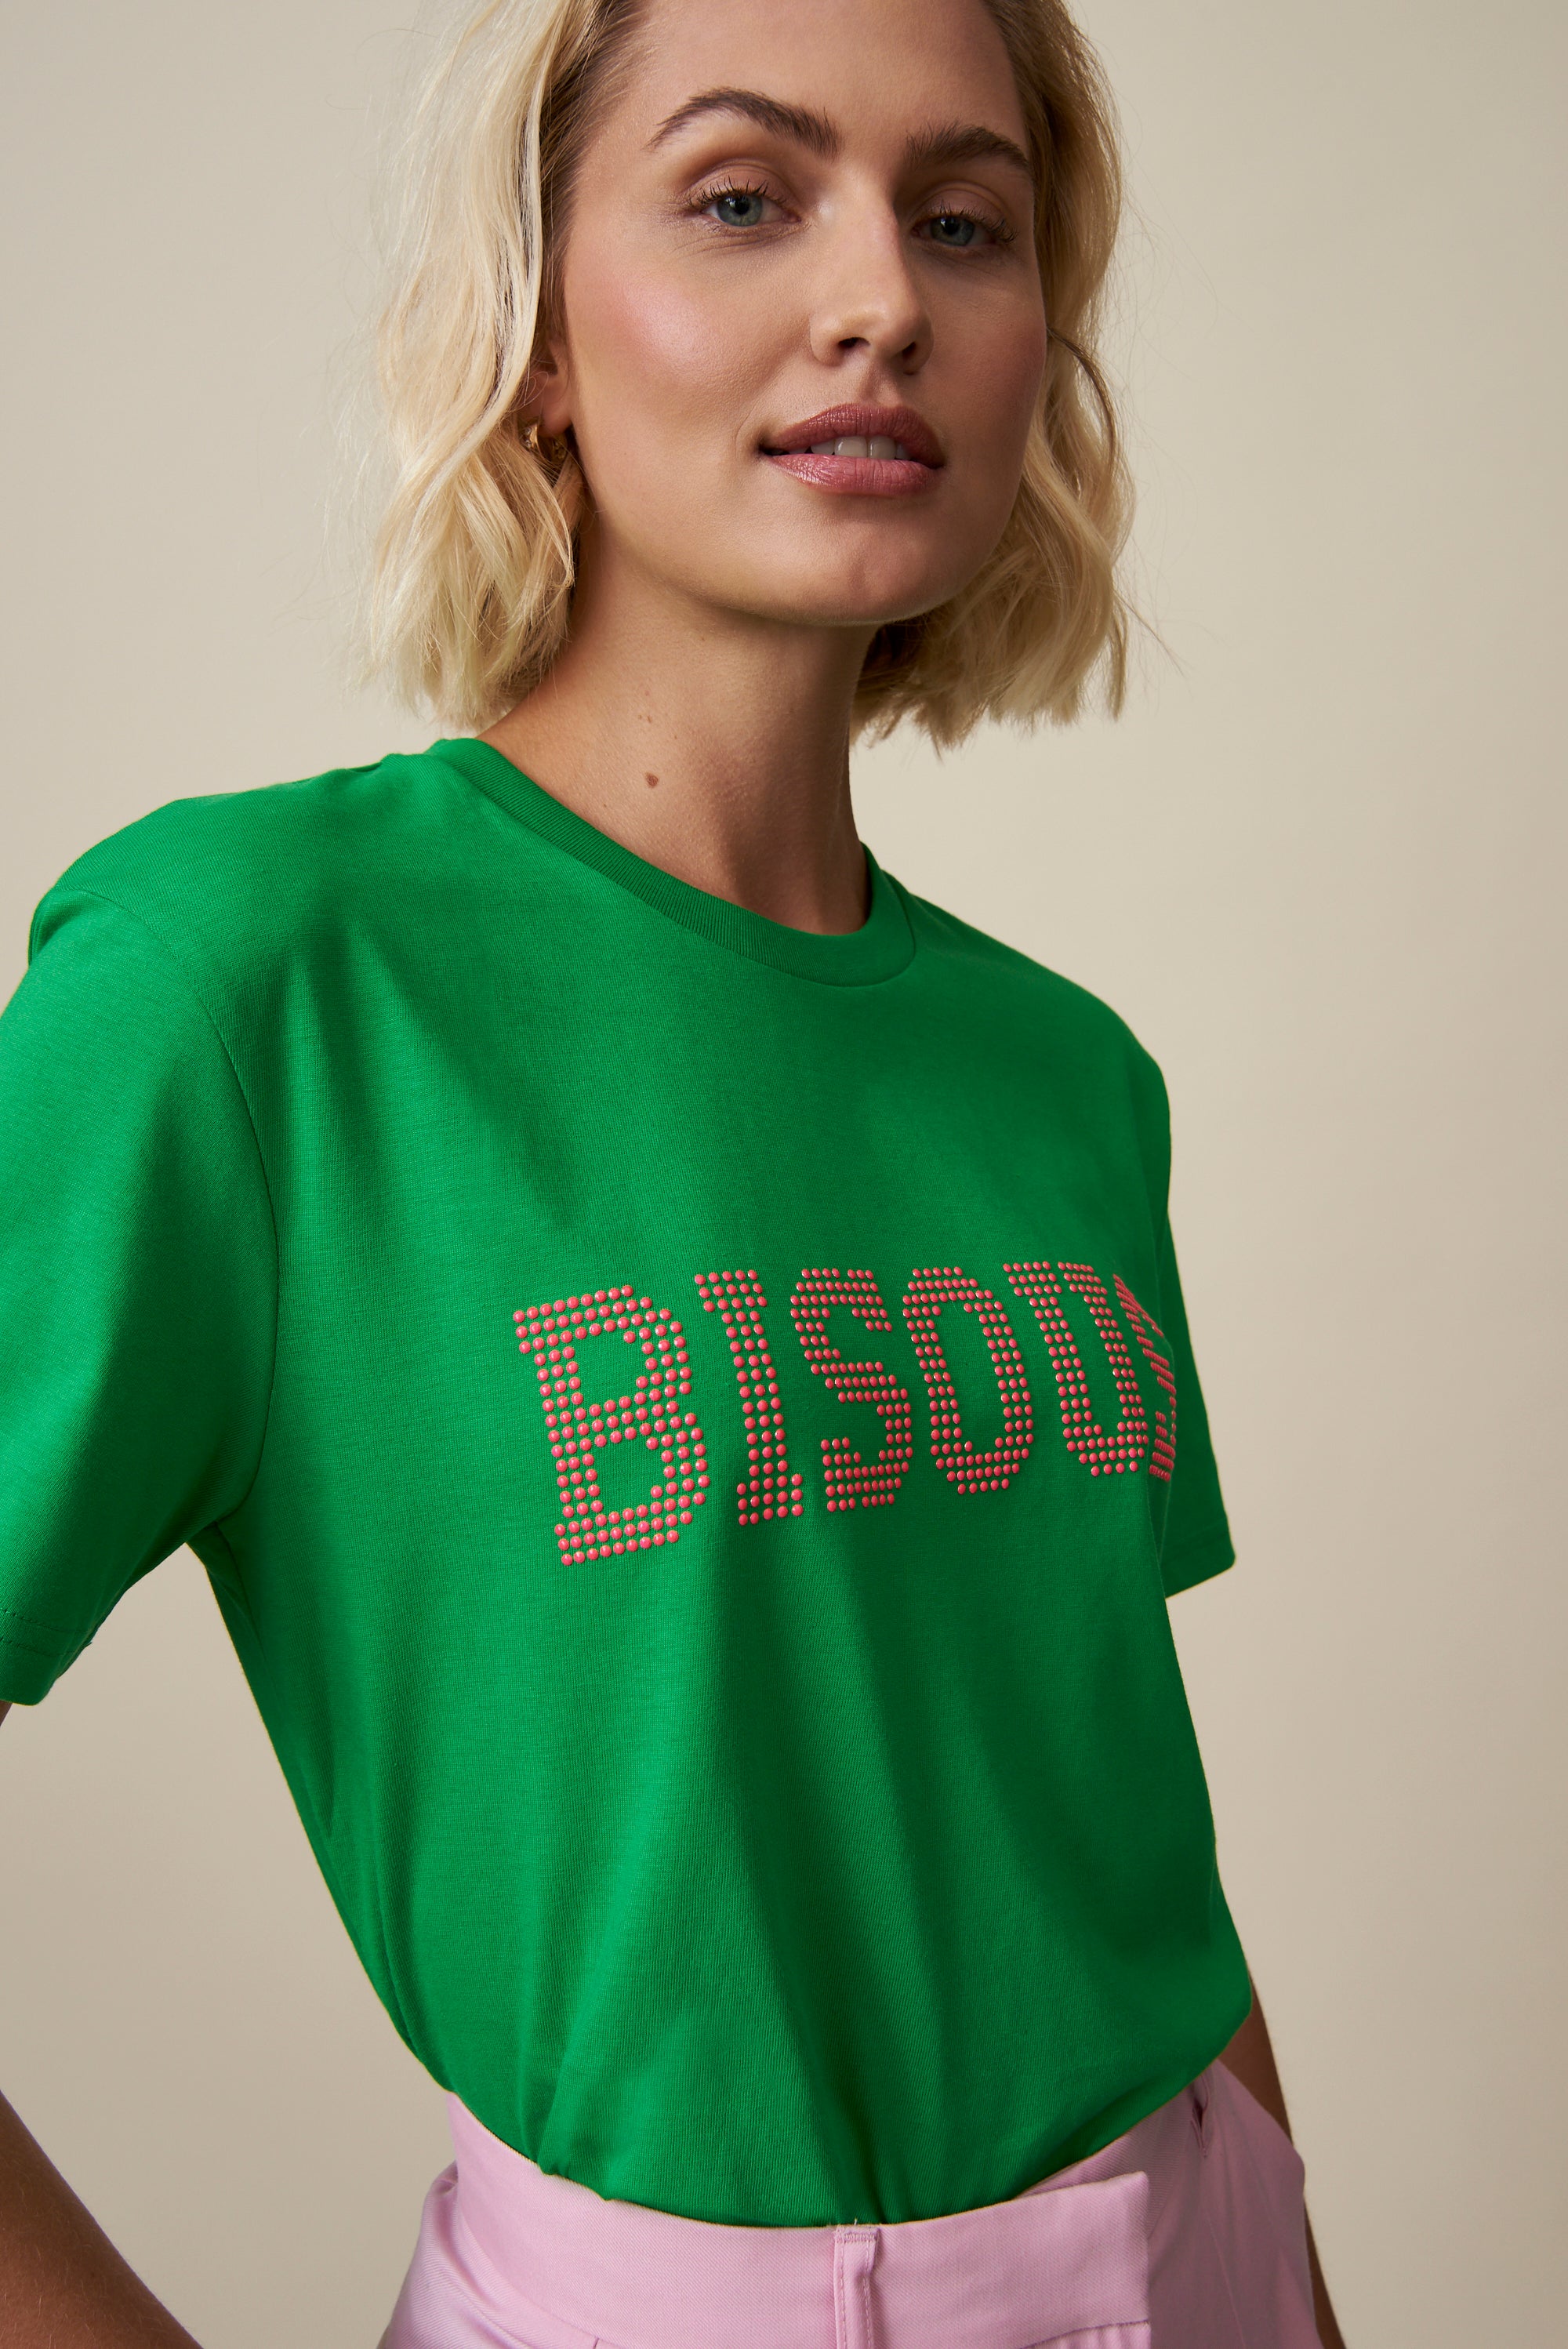 Bisous T-Shirt - Green / Neon Pink Rhinestones